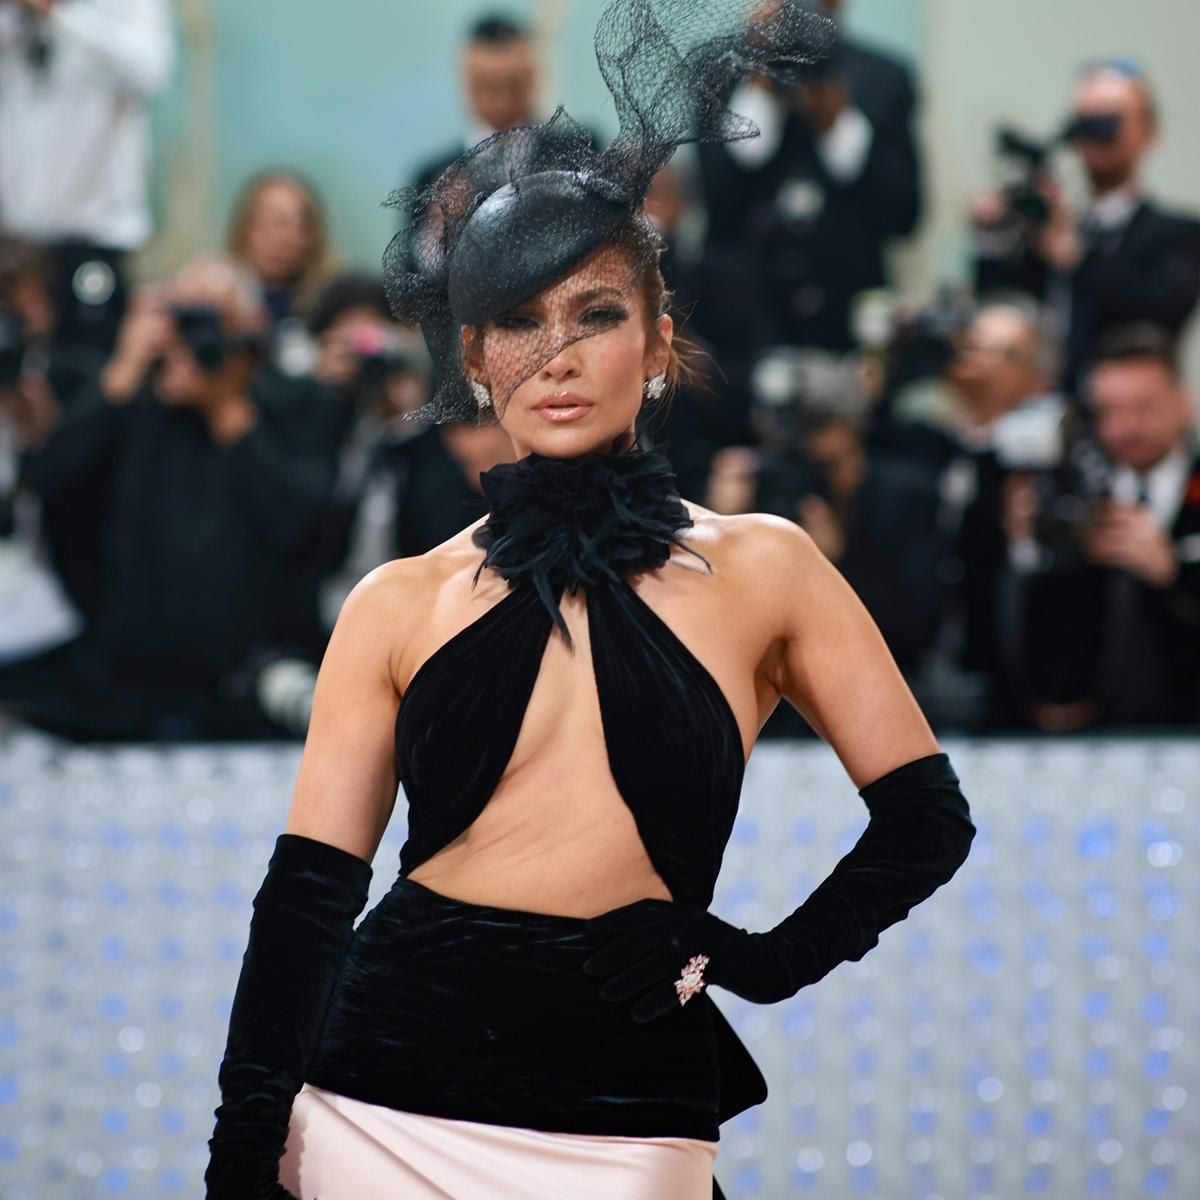 Jennifer Lopez arrives at the Met Gala without Ben Affleck